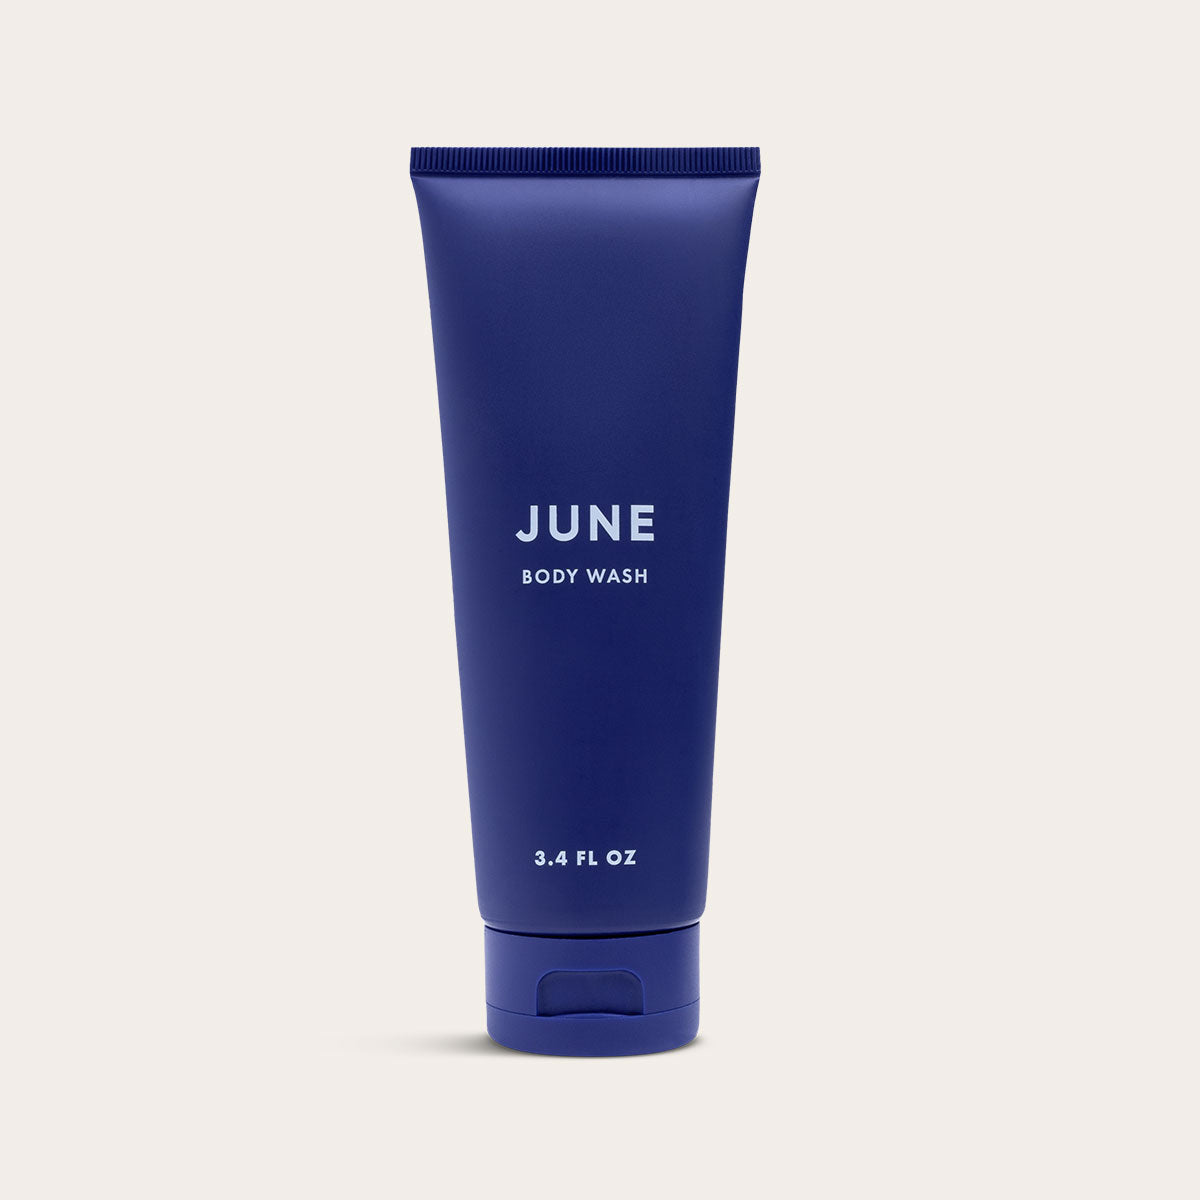 June Body Wash